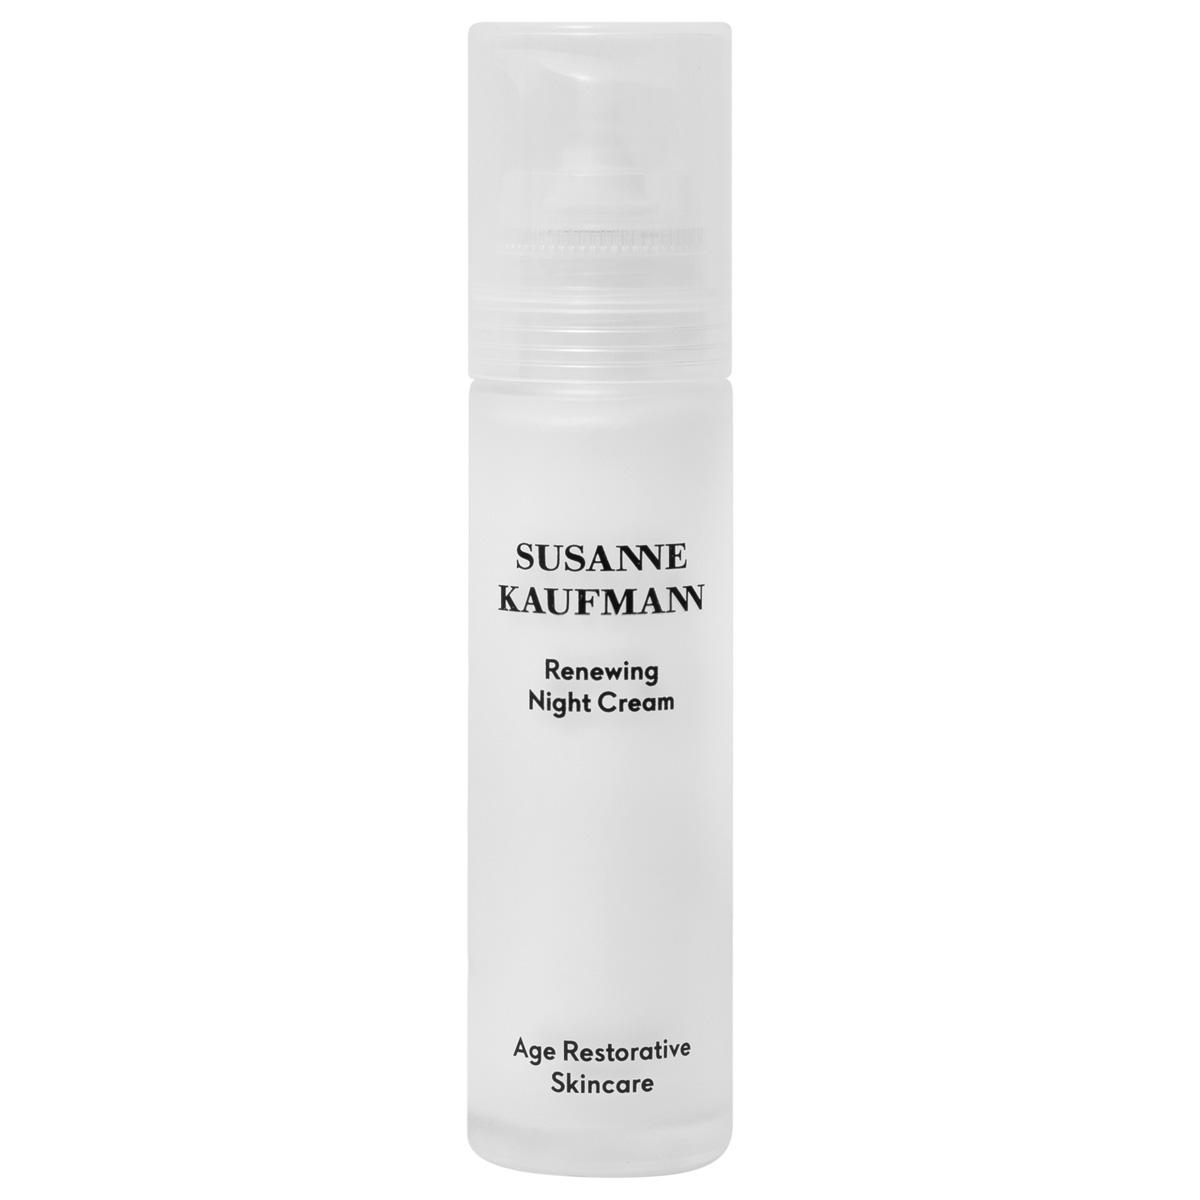 Susanne Kaufmann Age Restorative Skincare Crème de nuit régénératrice - Renewing Night Cream 50 ml - 1